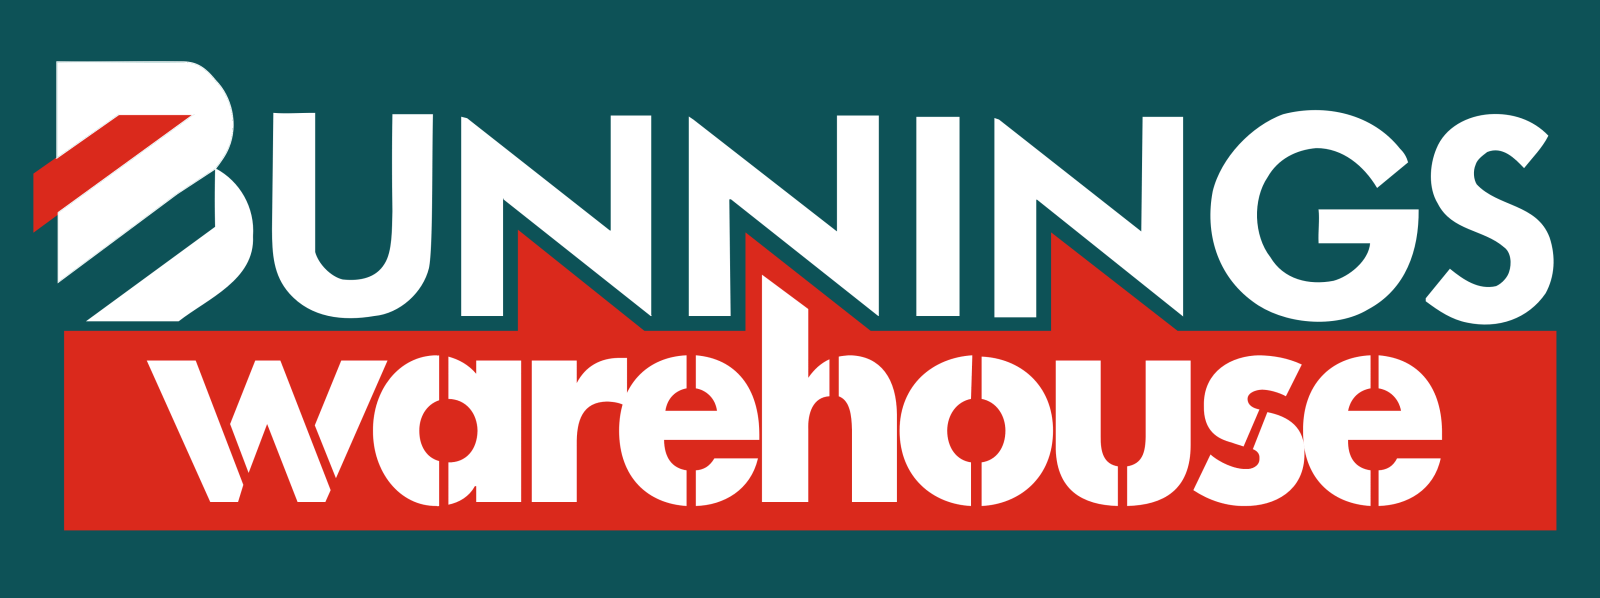 Bunnings_Warehouse_logo_background